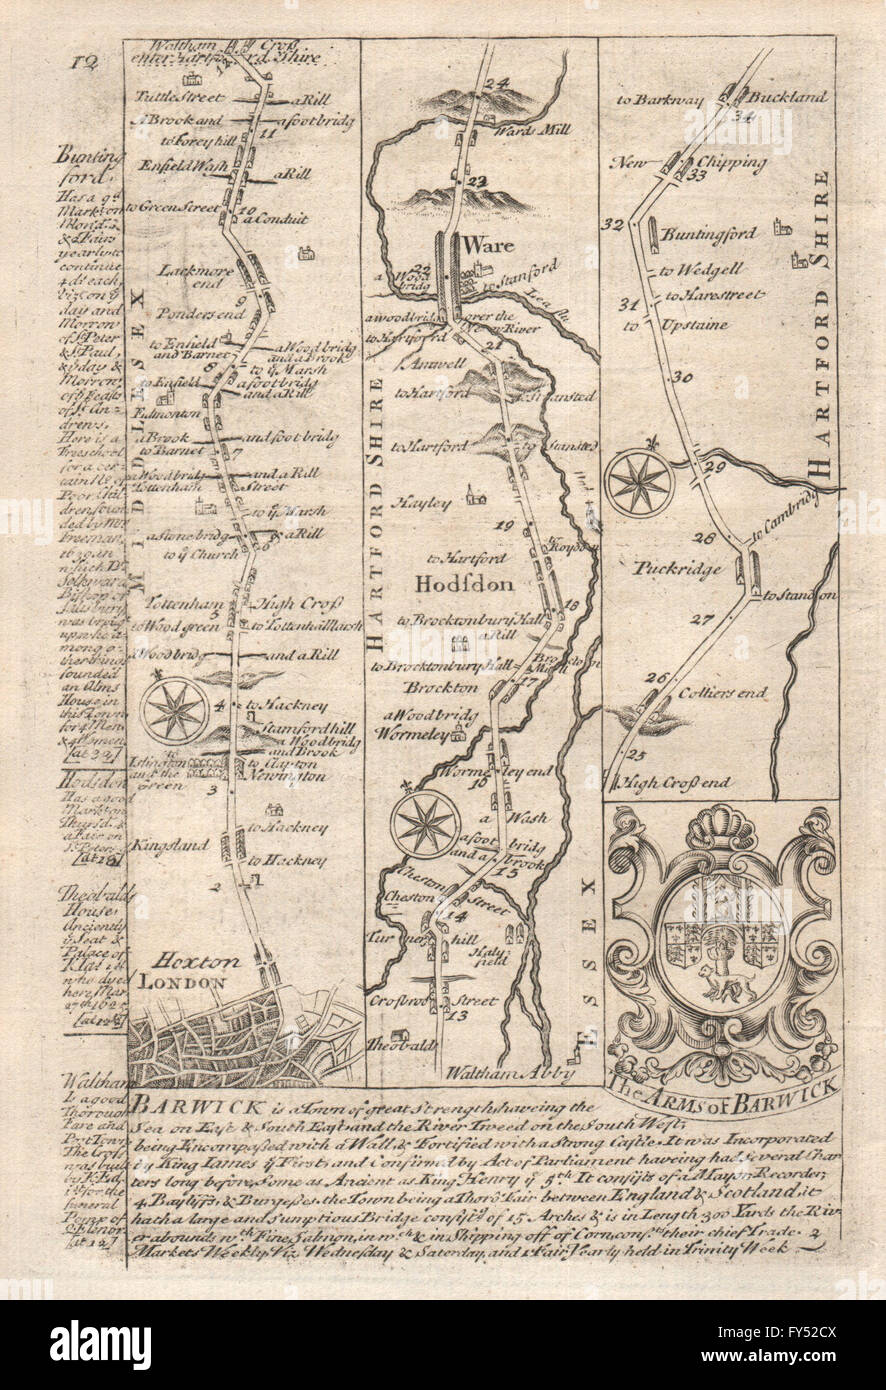 London-Hoxton-Tottenham-Edmonton-Waltham Cross-Hoddesdon-Ware BOWEN map 1753 